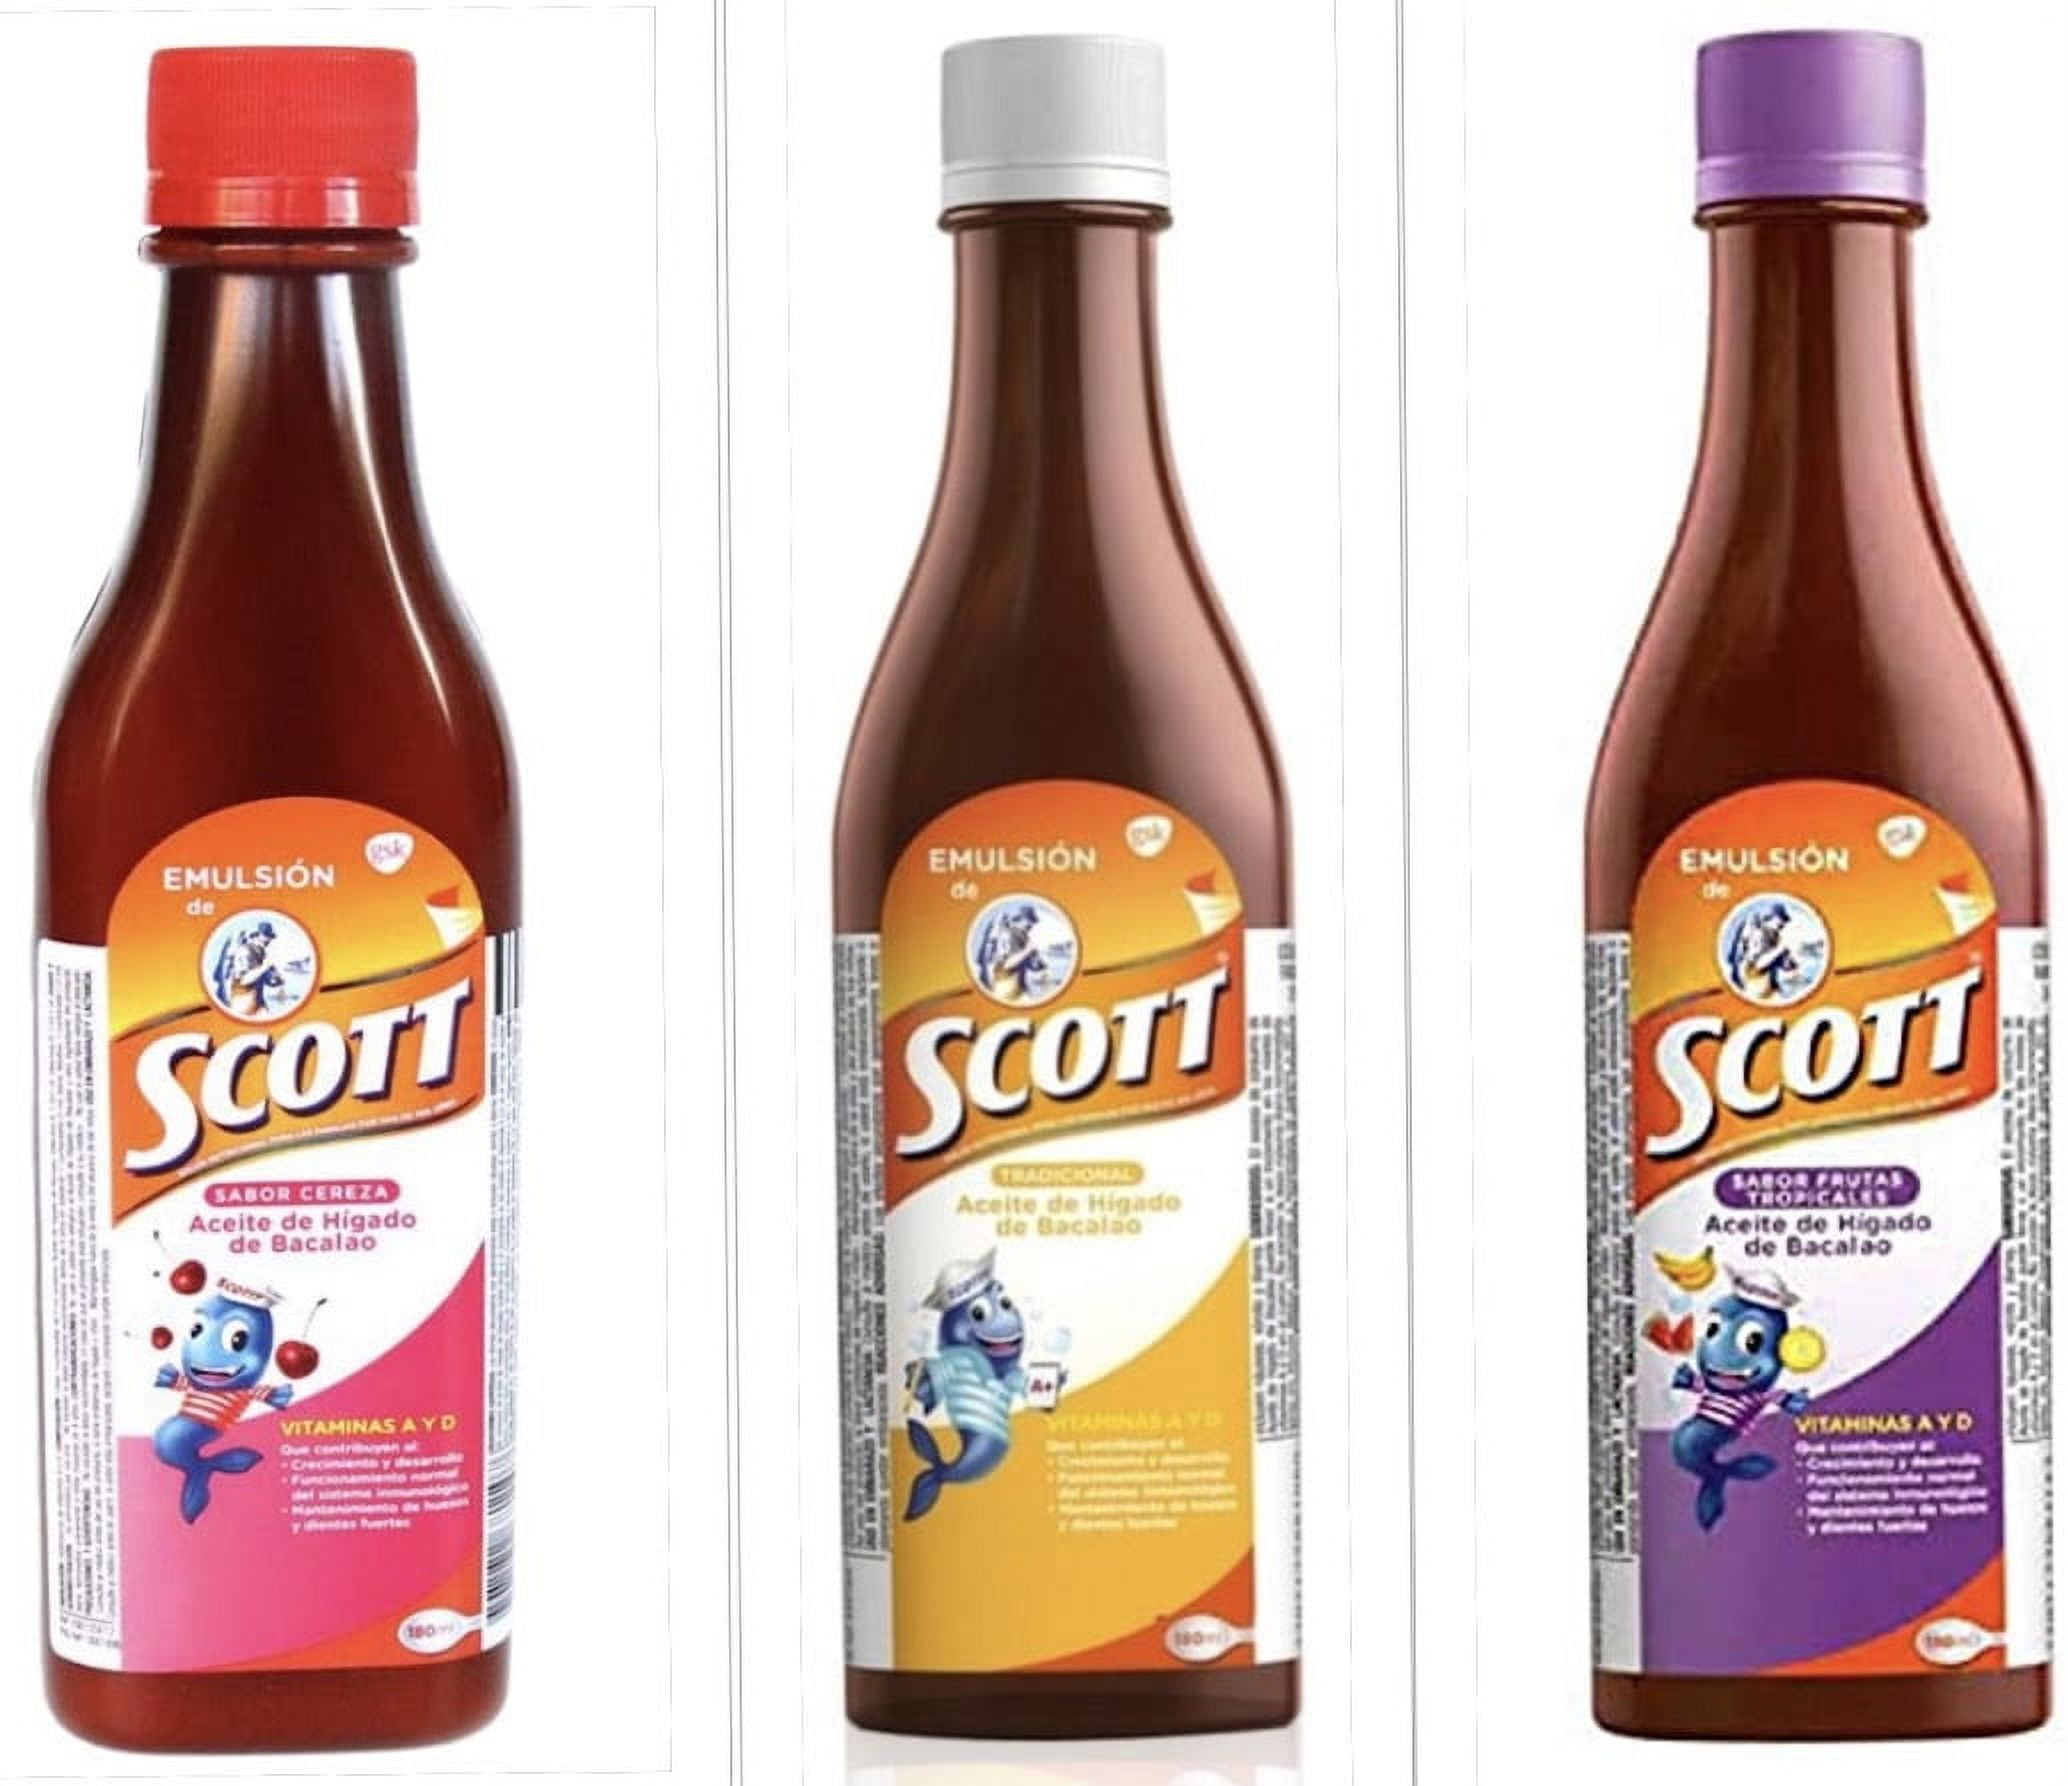 Emulsion de Scott Sabor (1) Tradicional(1)Cherry (1) Frutas Tropicales 3  PACK COMBO / Cod Liver Oil. Traditional flavor. Vitamins A & D. 180ml EACH